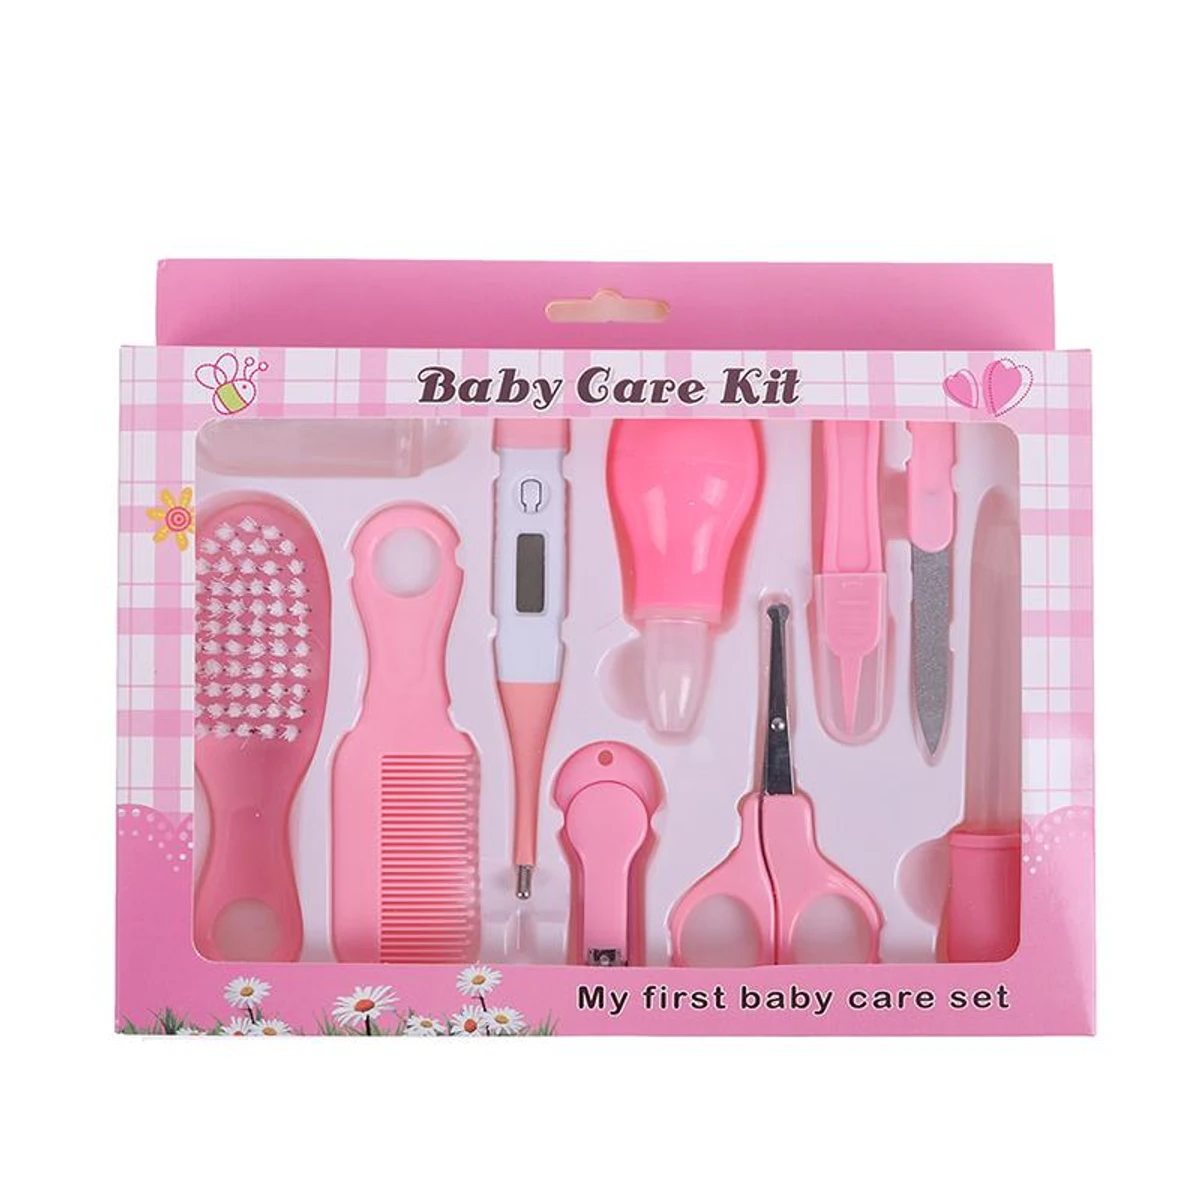 Baby nursing & grooming kit